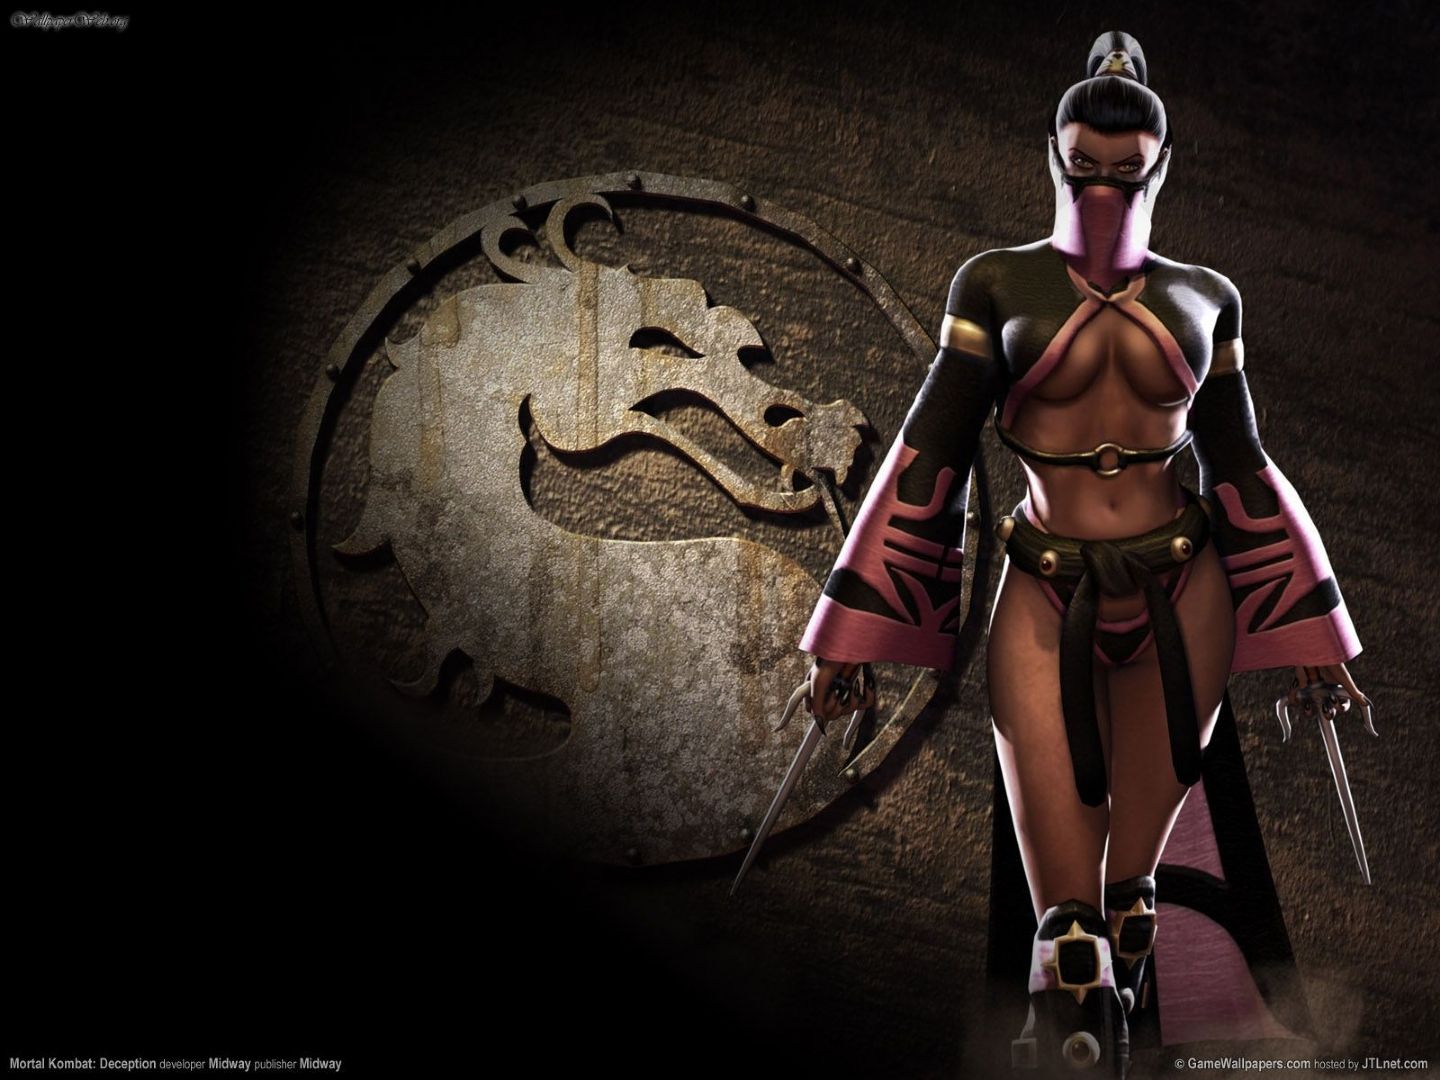 Games: Mortal Kombat: Deception, picture nr. 30006